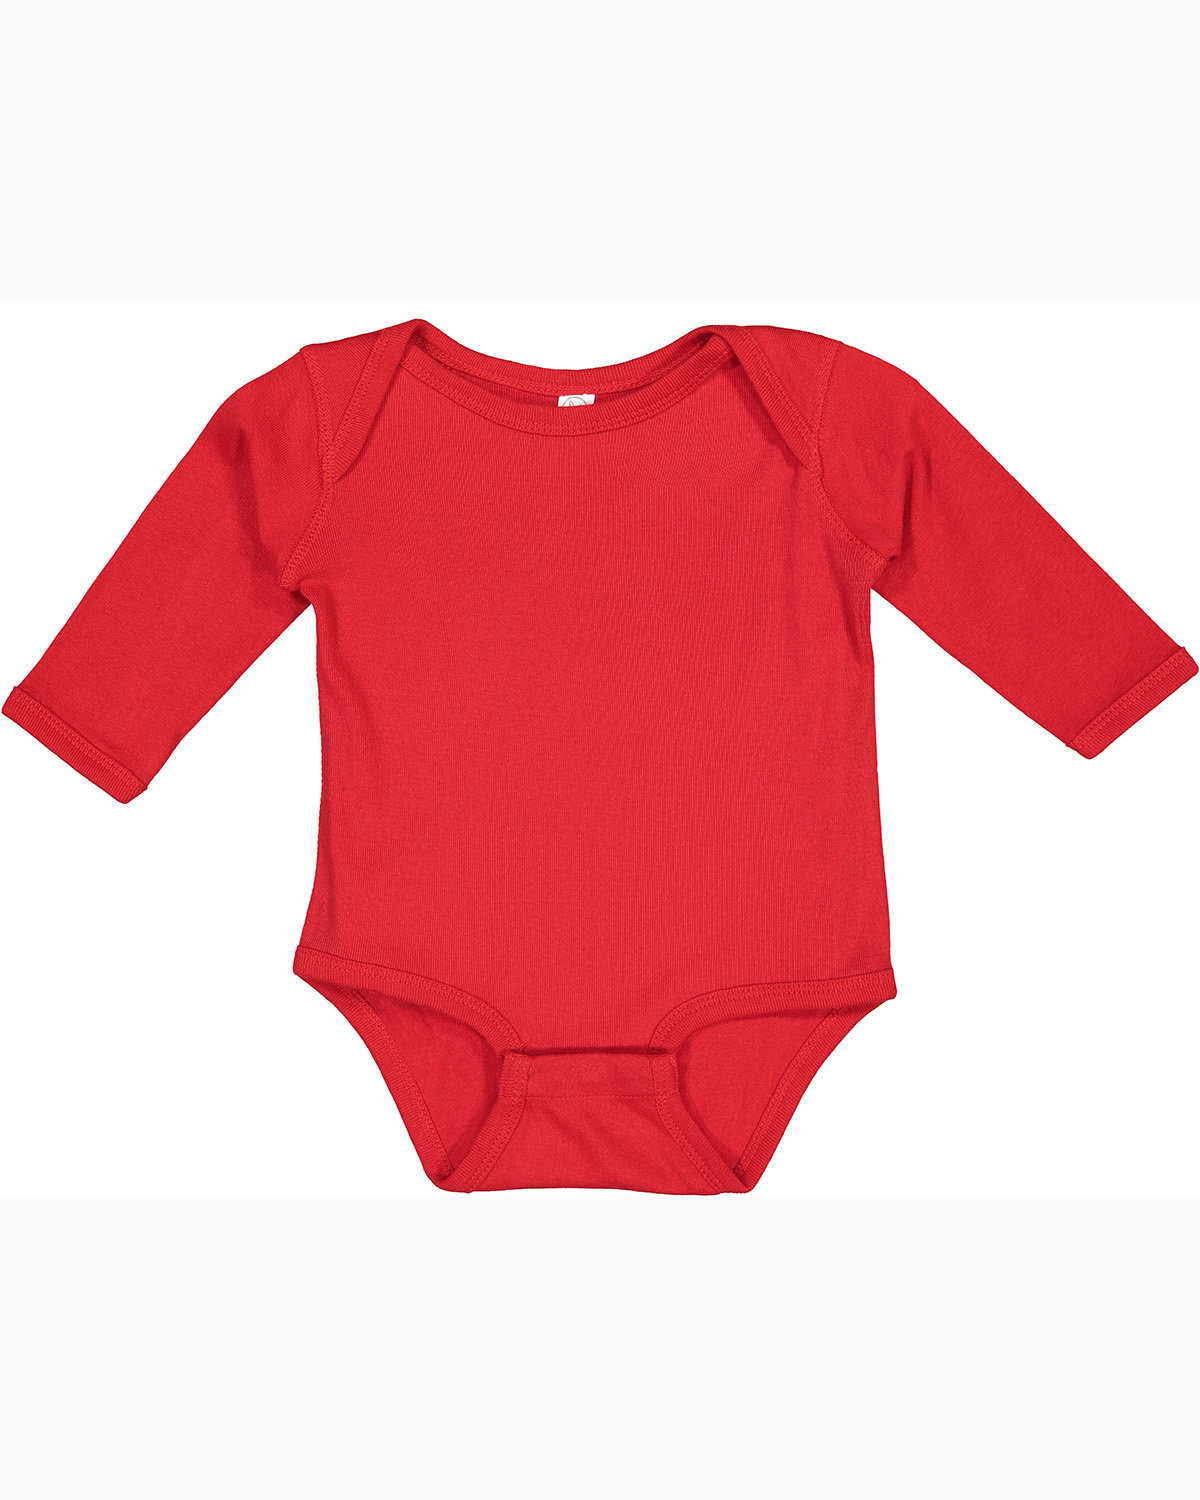 Rabbit Skins Infant Long-Sleeve Baby Rib Bodysuit RED 